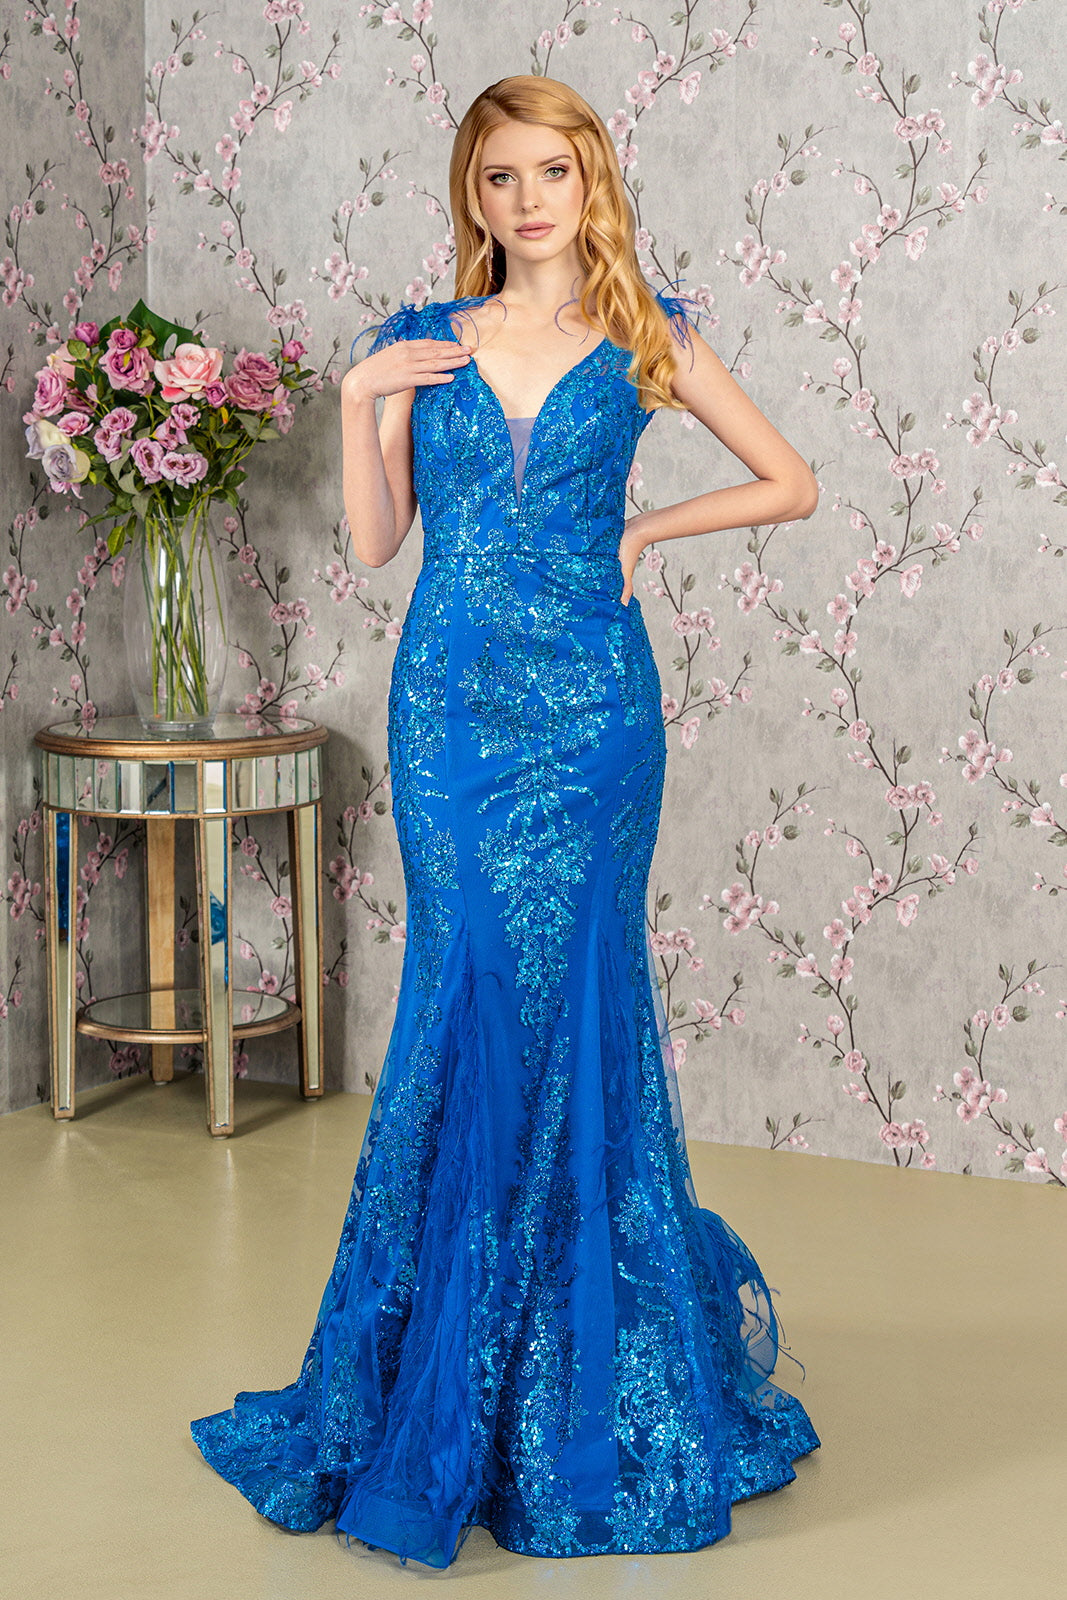 Silver/Nude Prom Long Formal Glitter Mesh Mermaid Dress for $296.99 ...